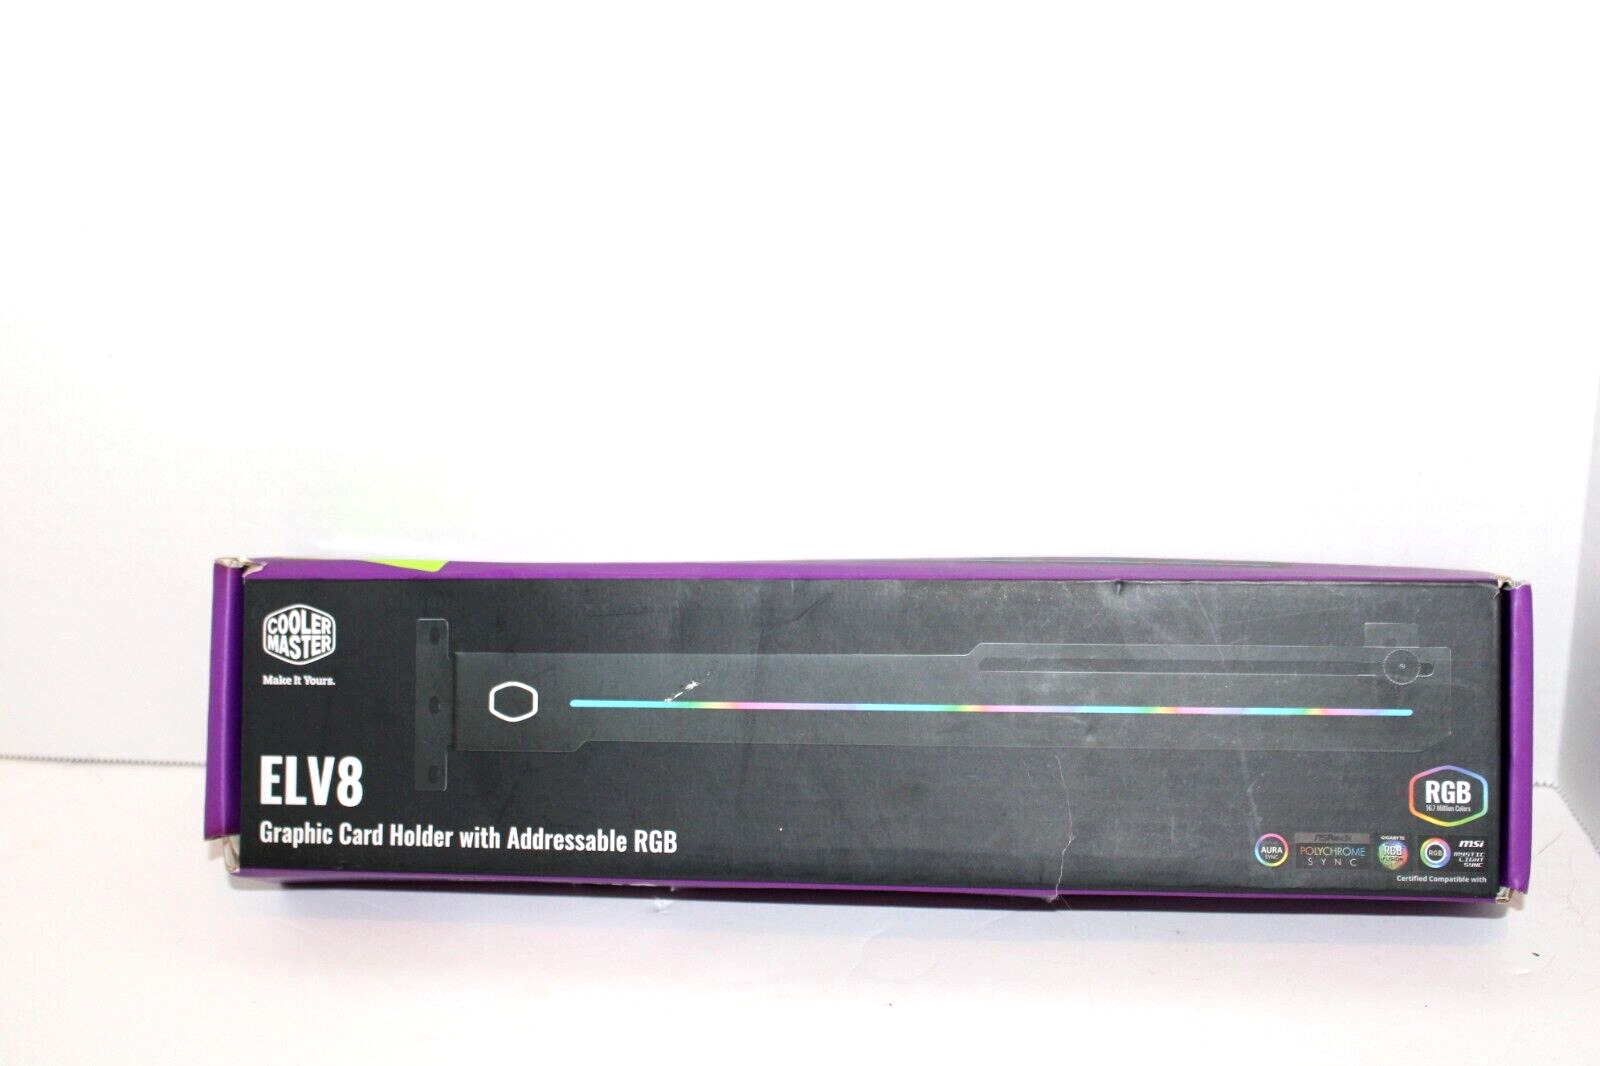 Cooler Master ELV8 Addressable RGB Vertical Universal Graphic Card Holder